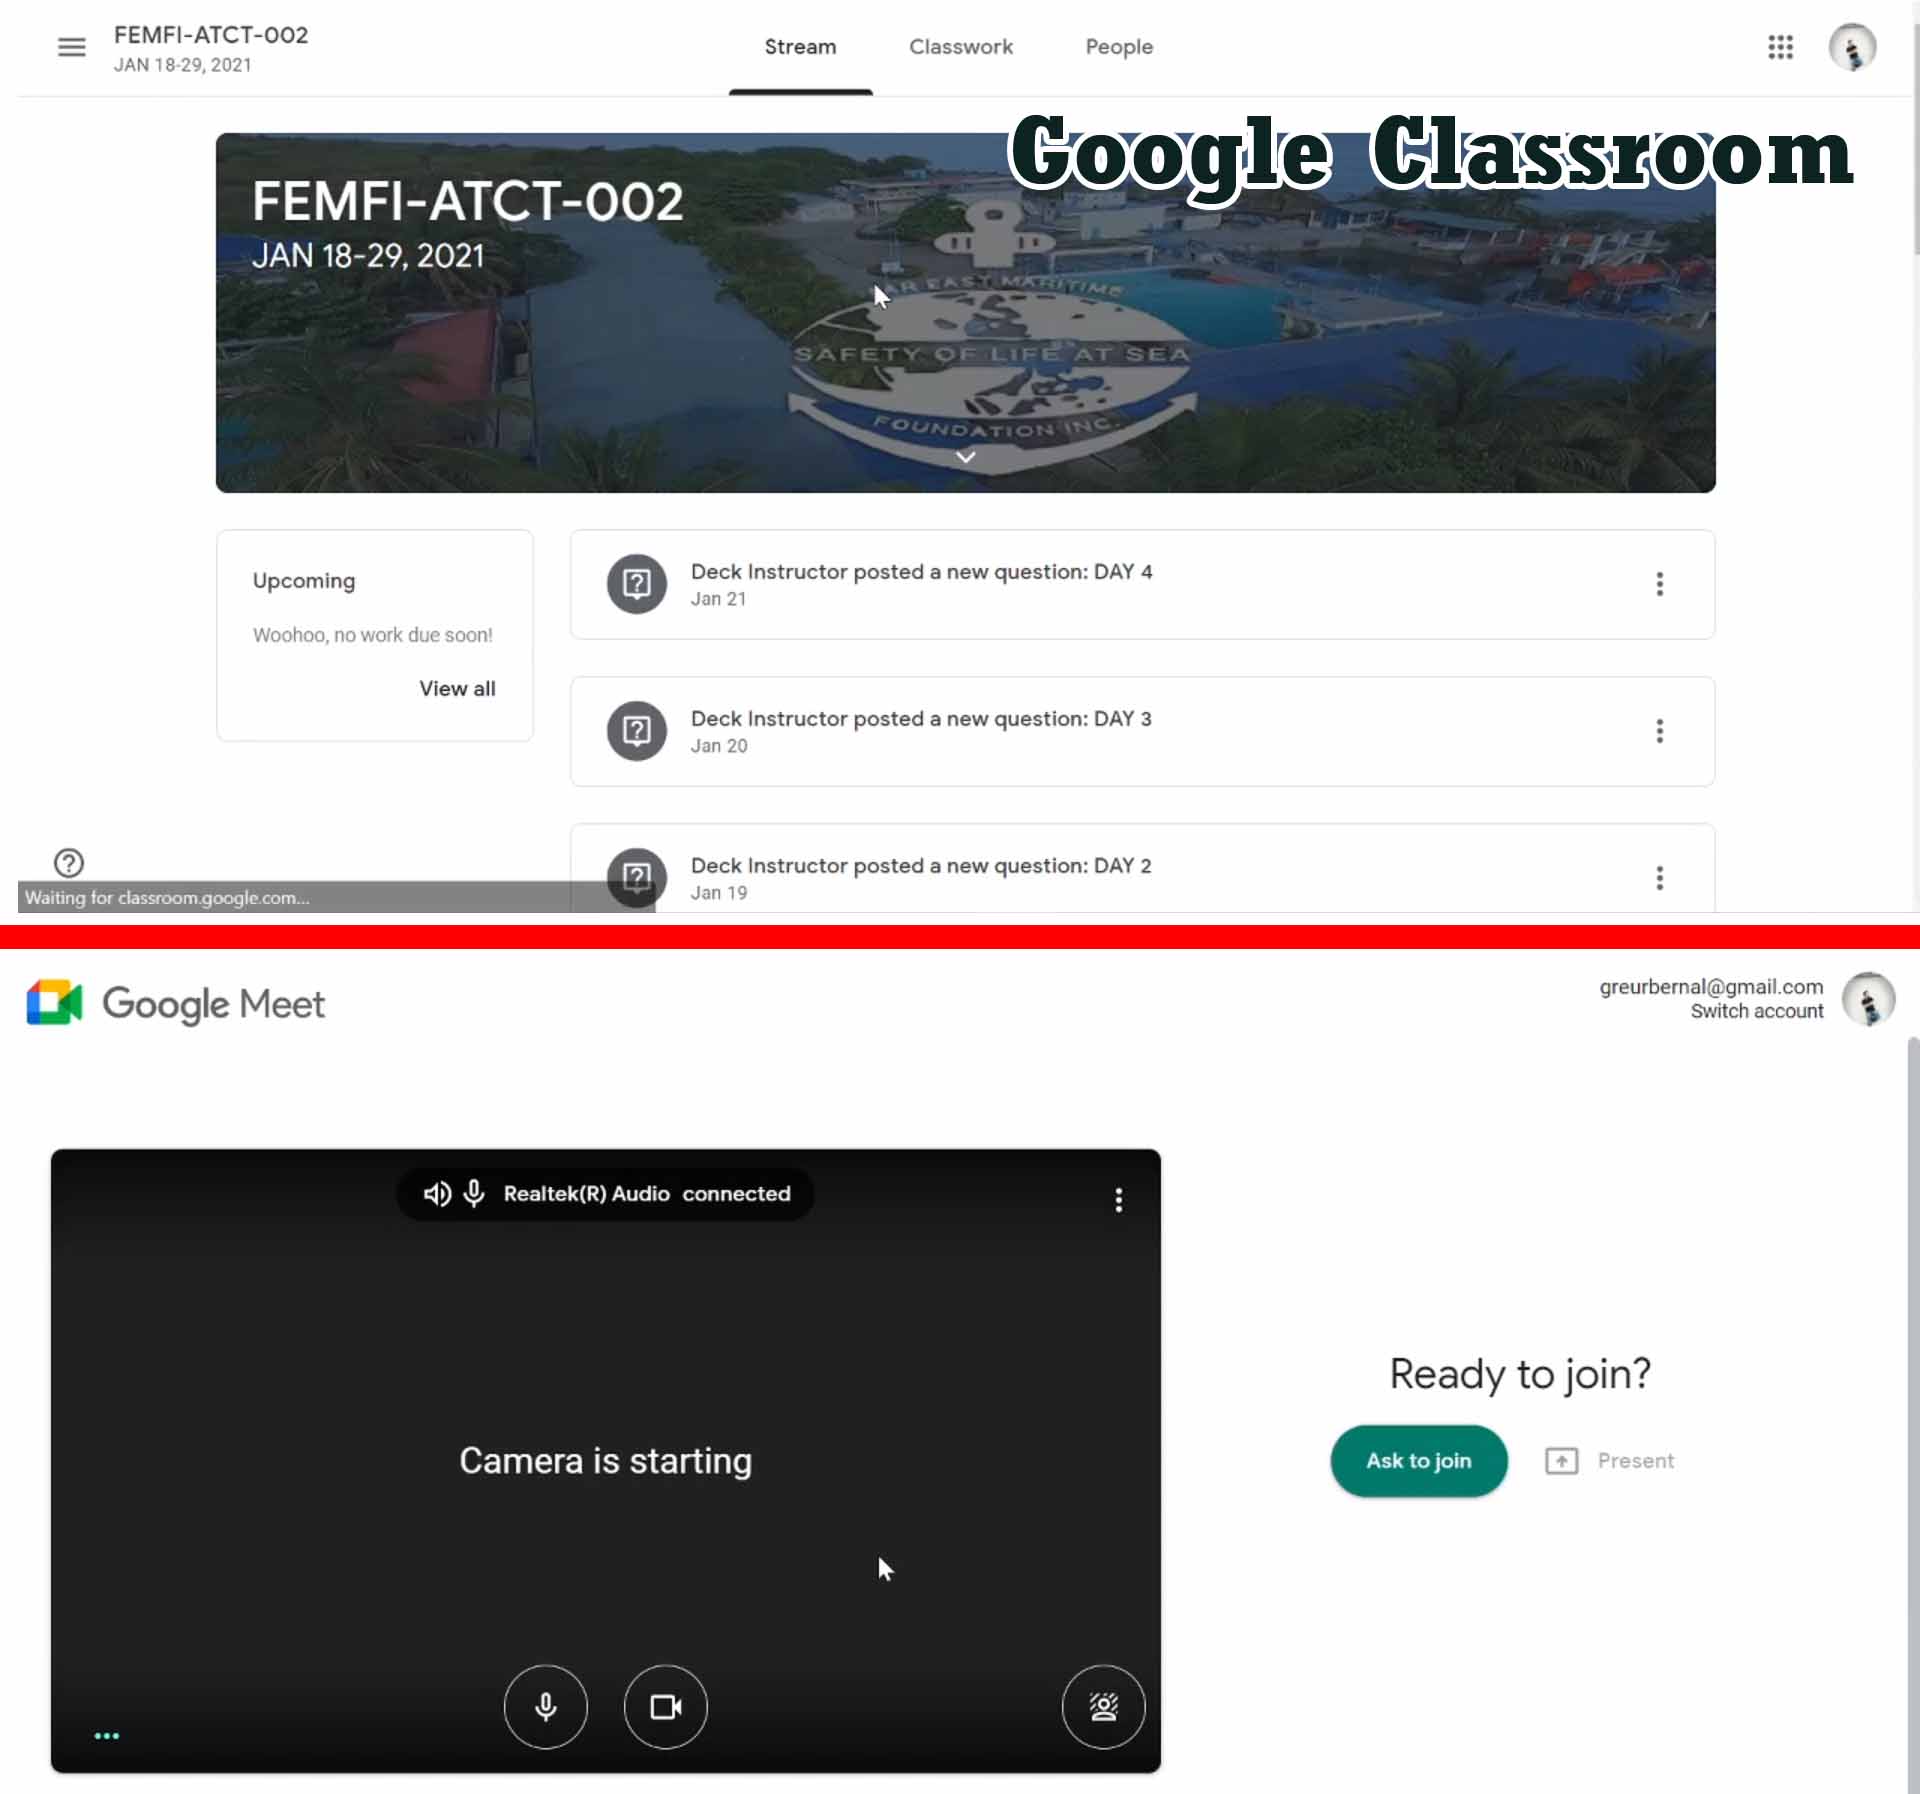 Platforms Google Classroom and Google Meet